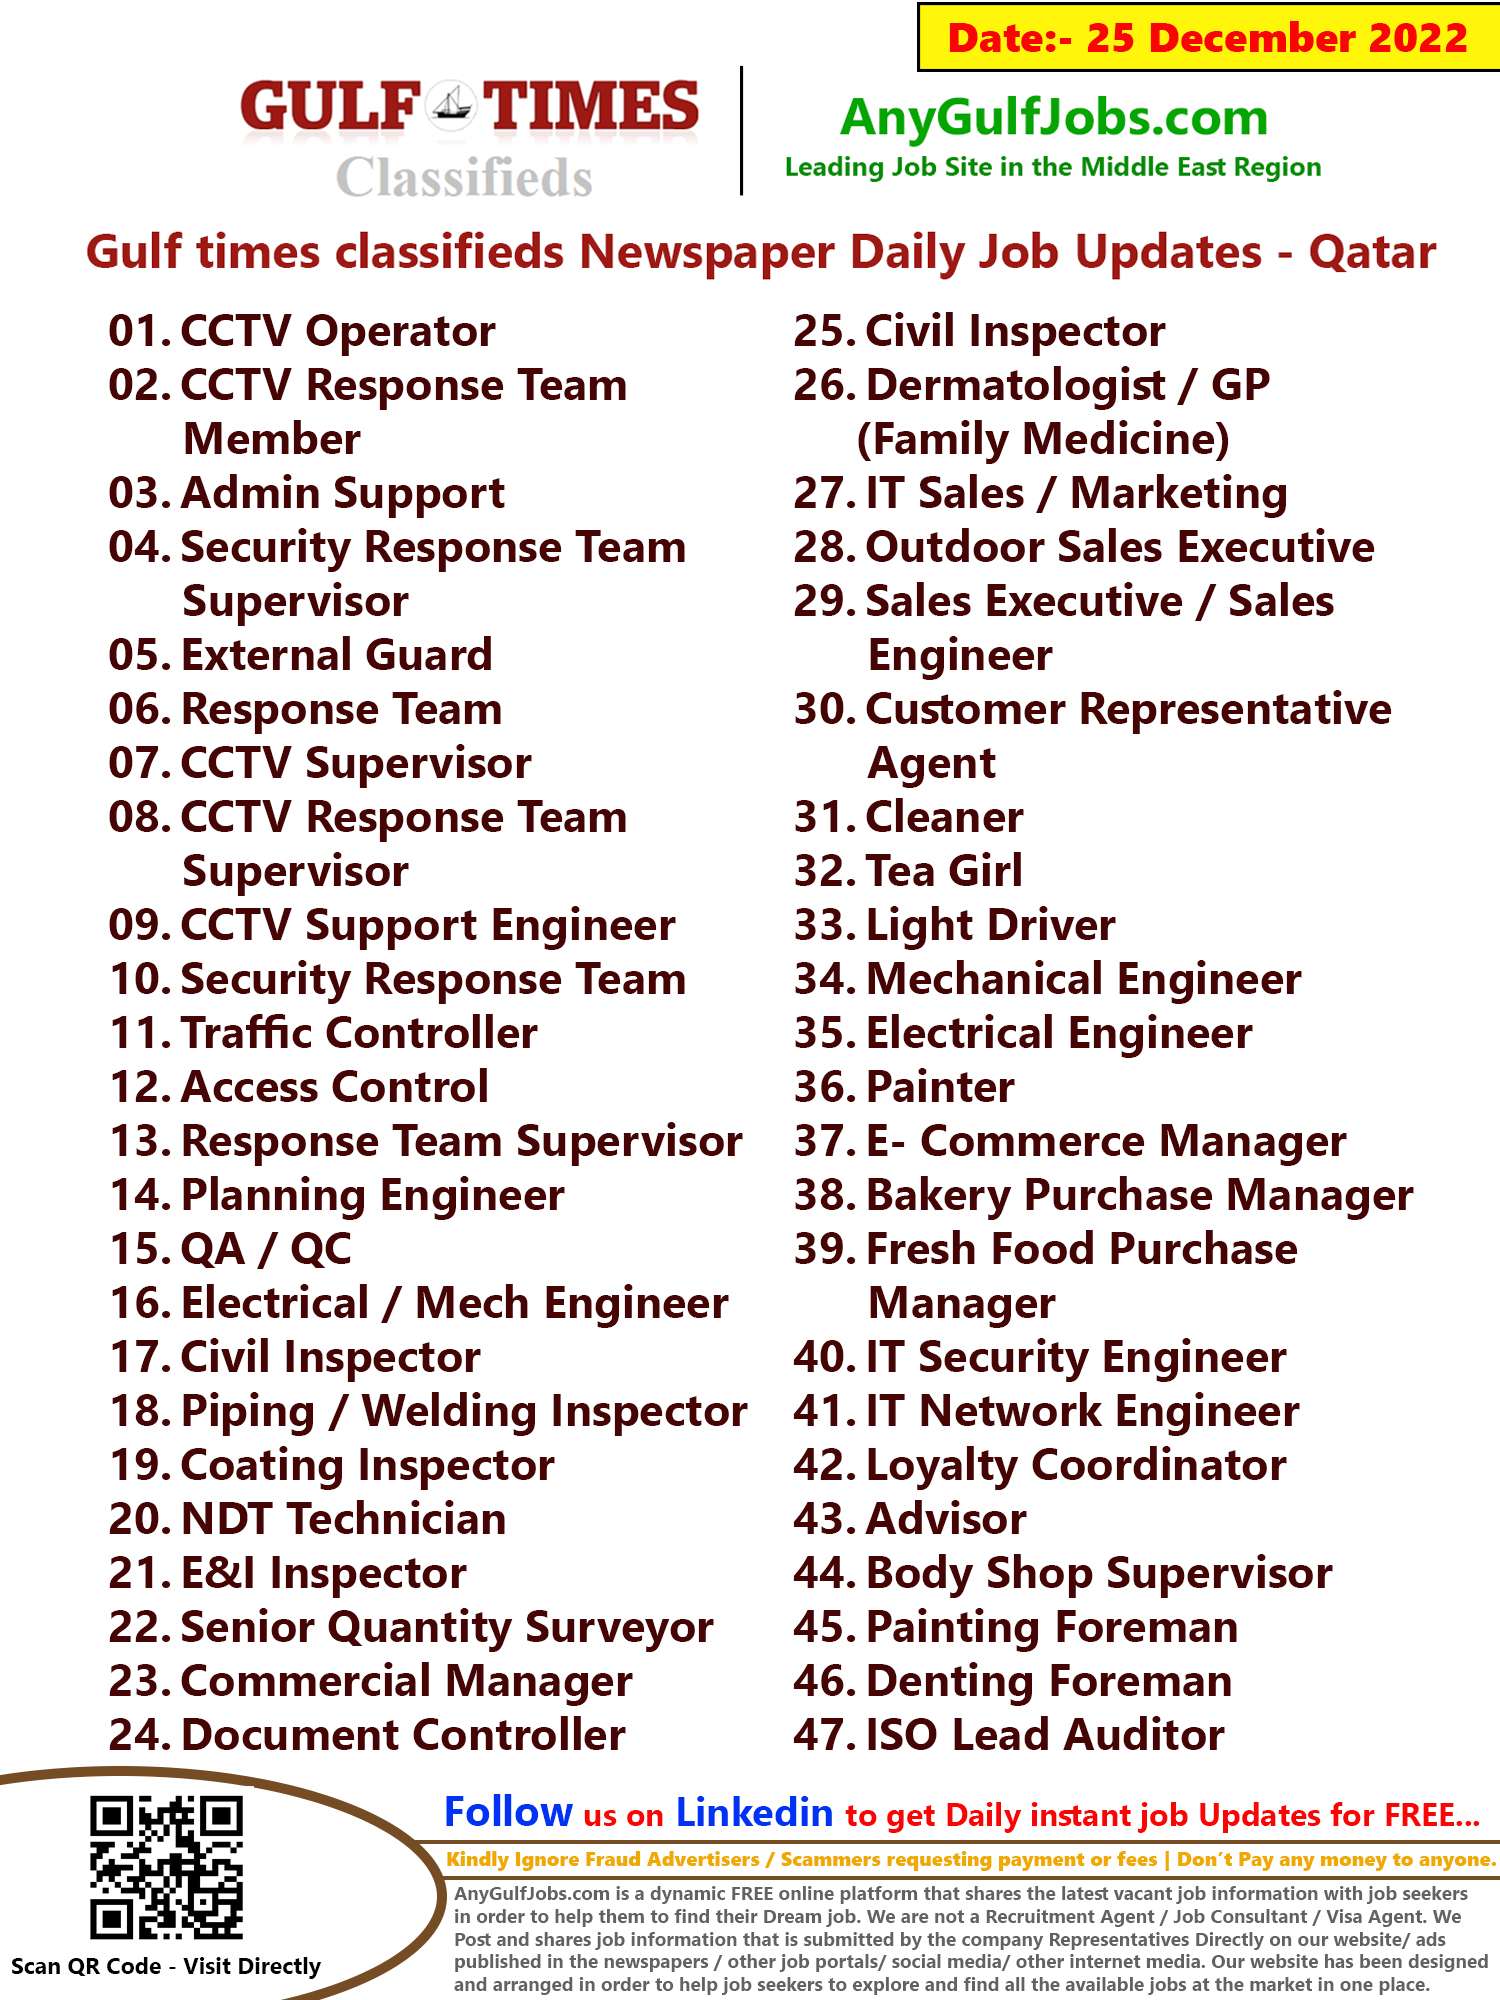 Gulf times classifieds Job Vacancies Qatar - 25 December 2022